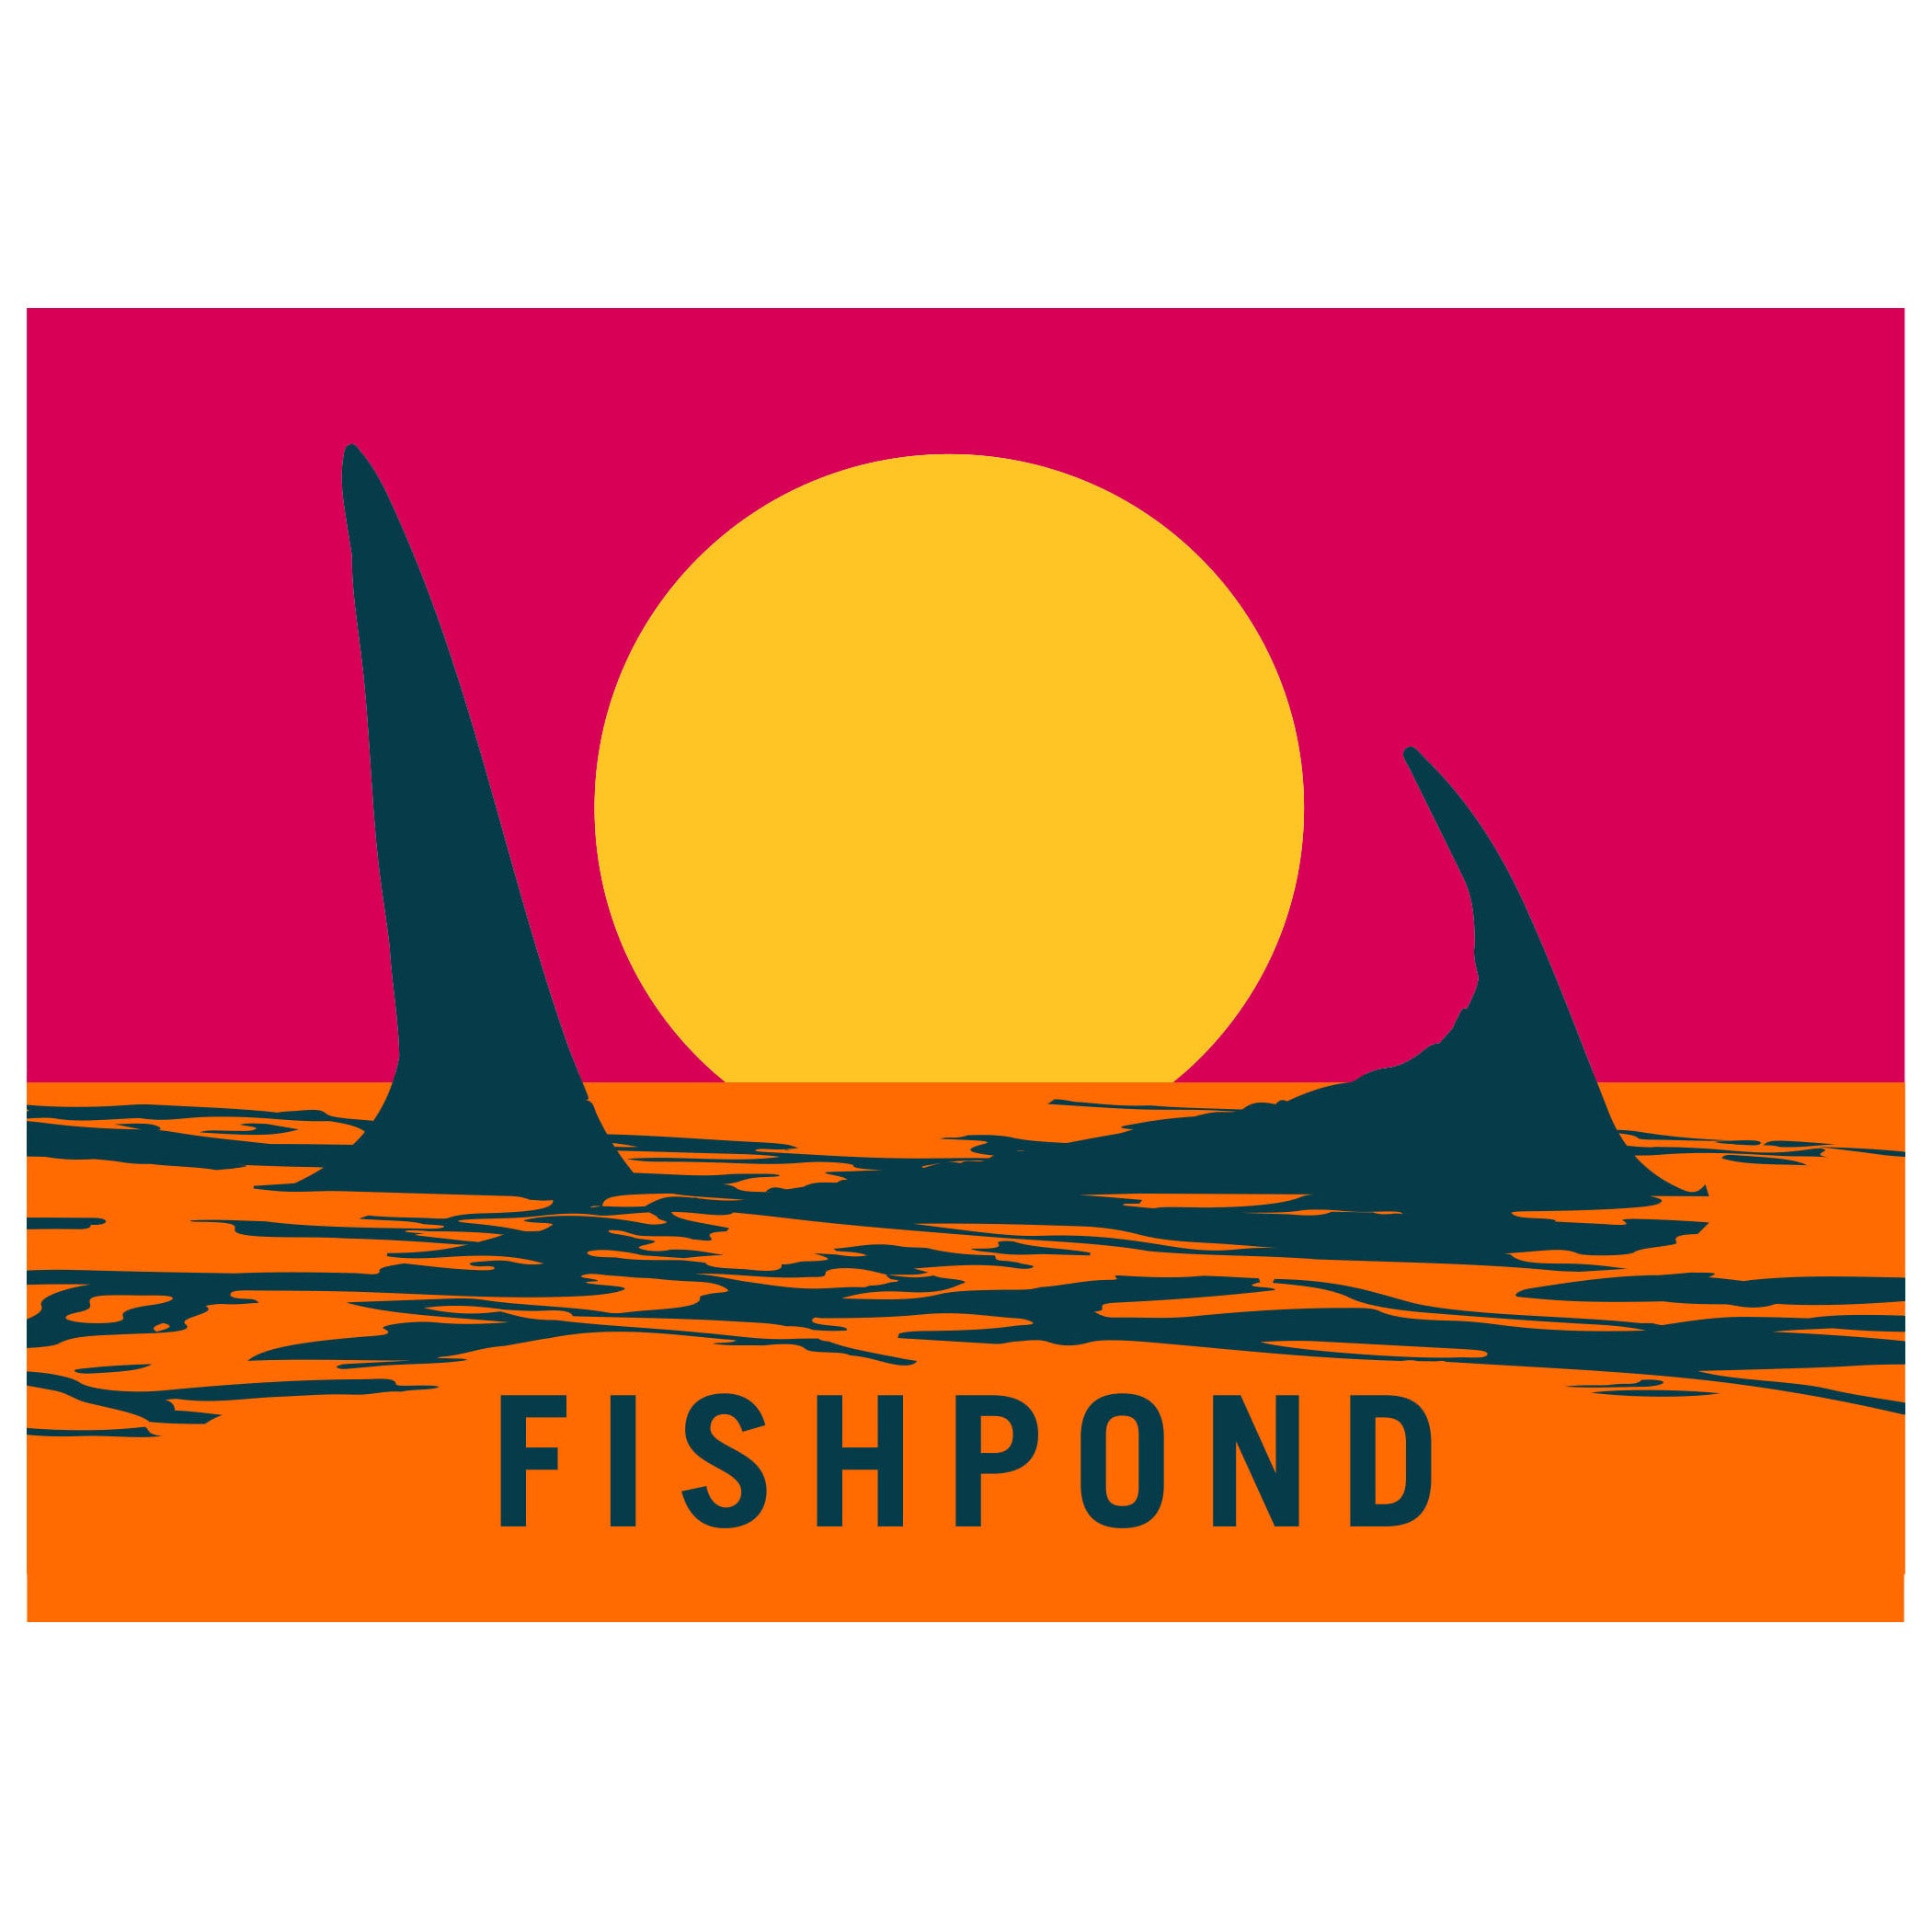 Fishpond Endless Permit Sticker Image 01